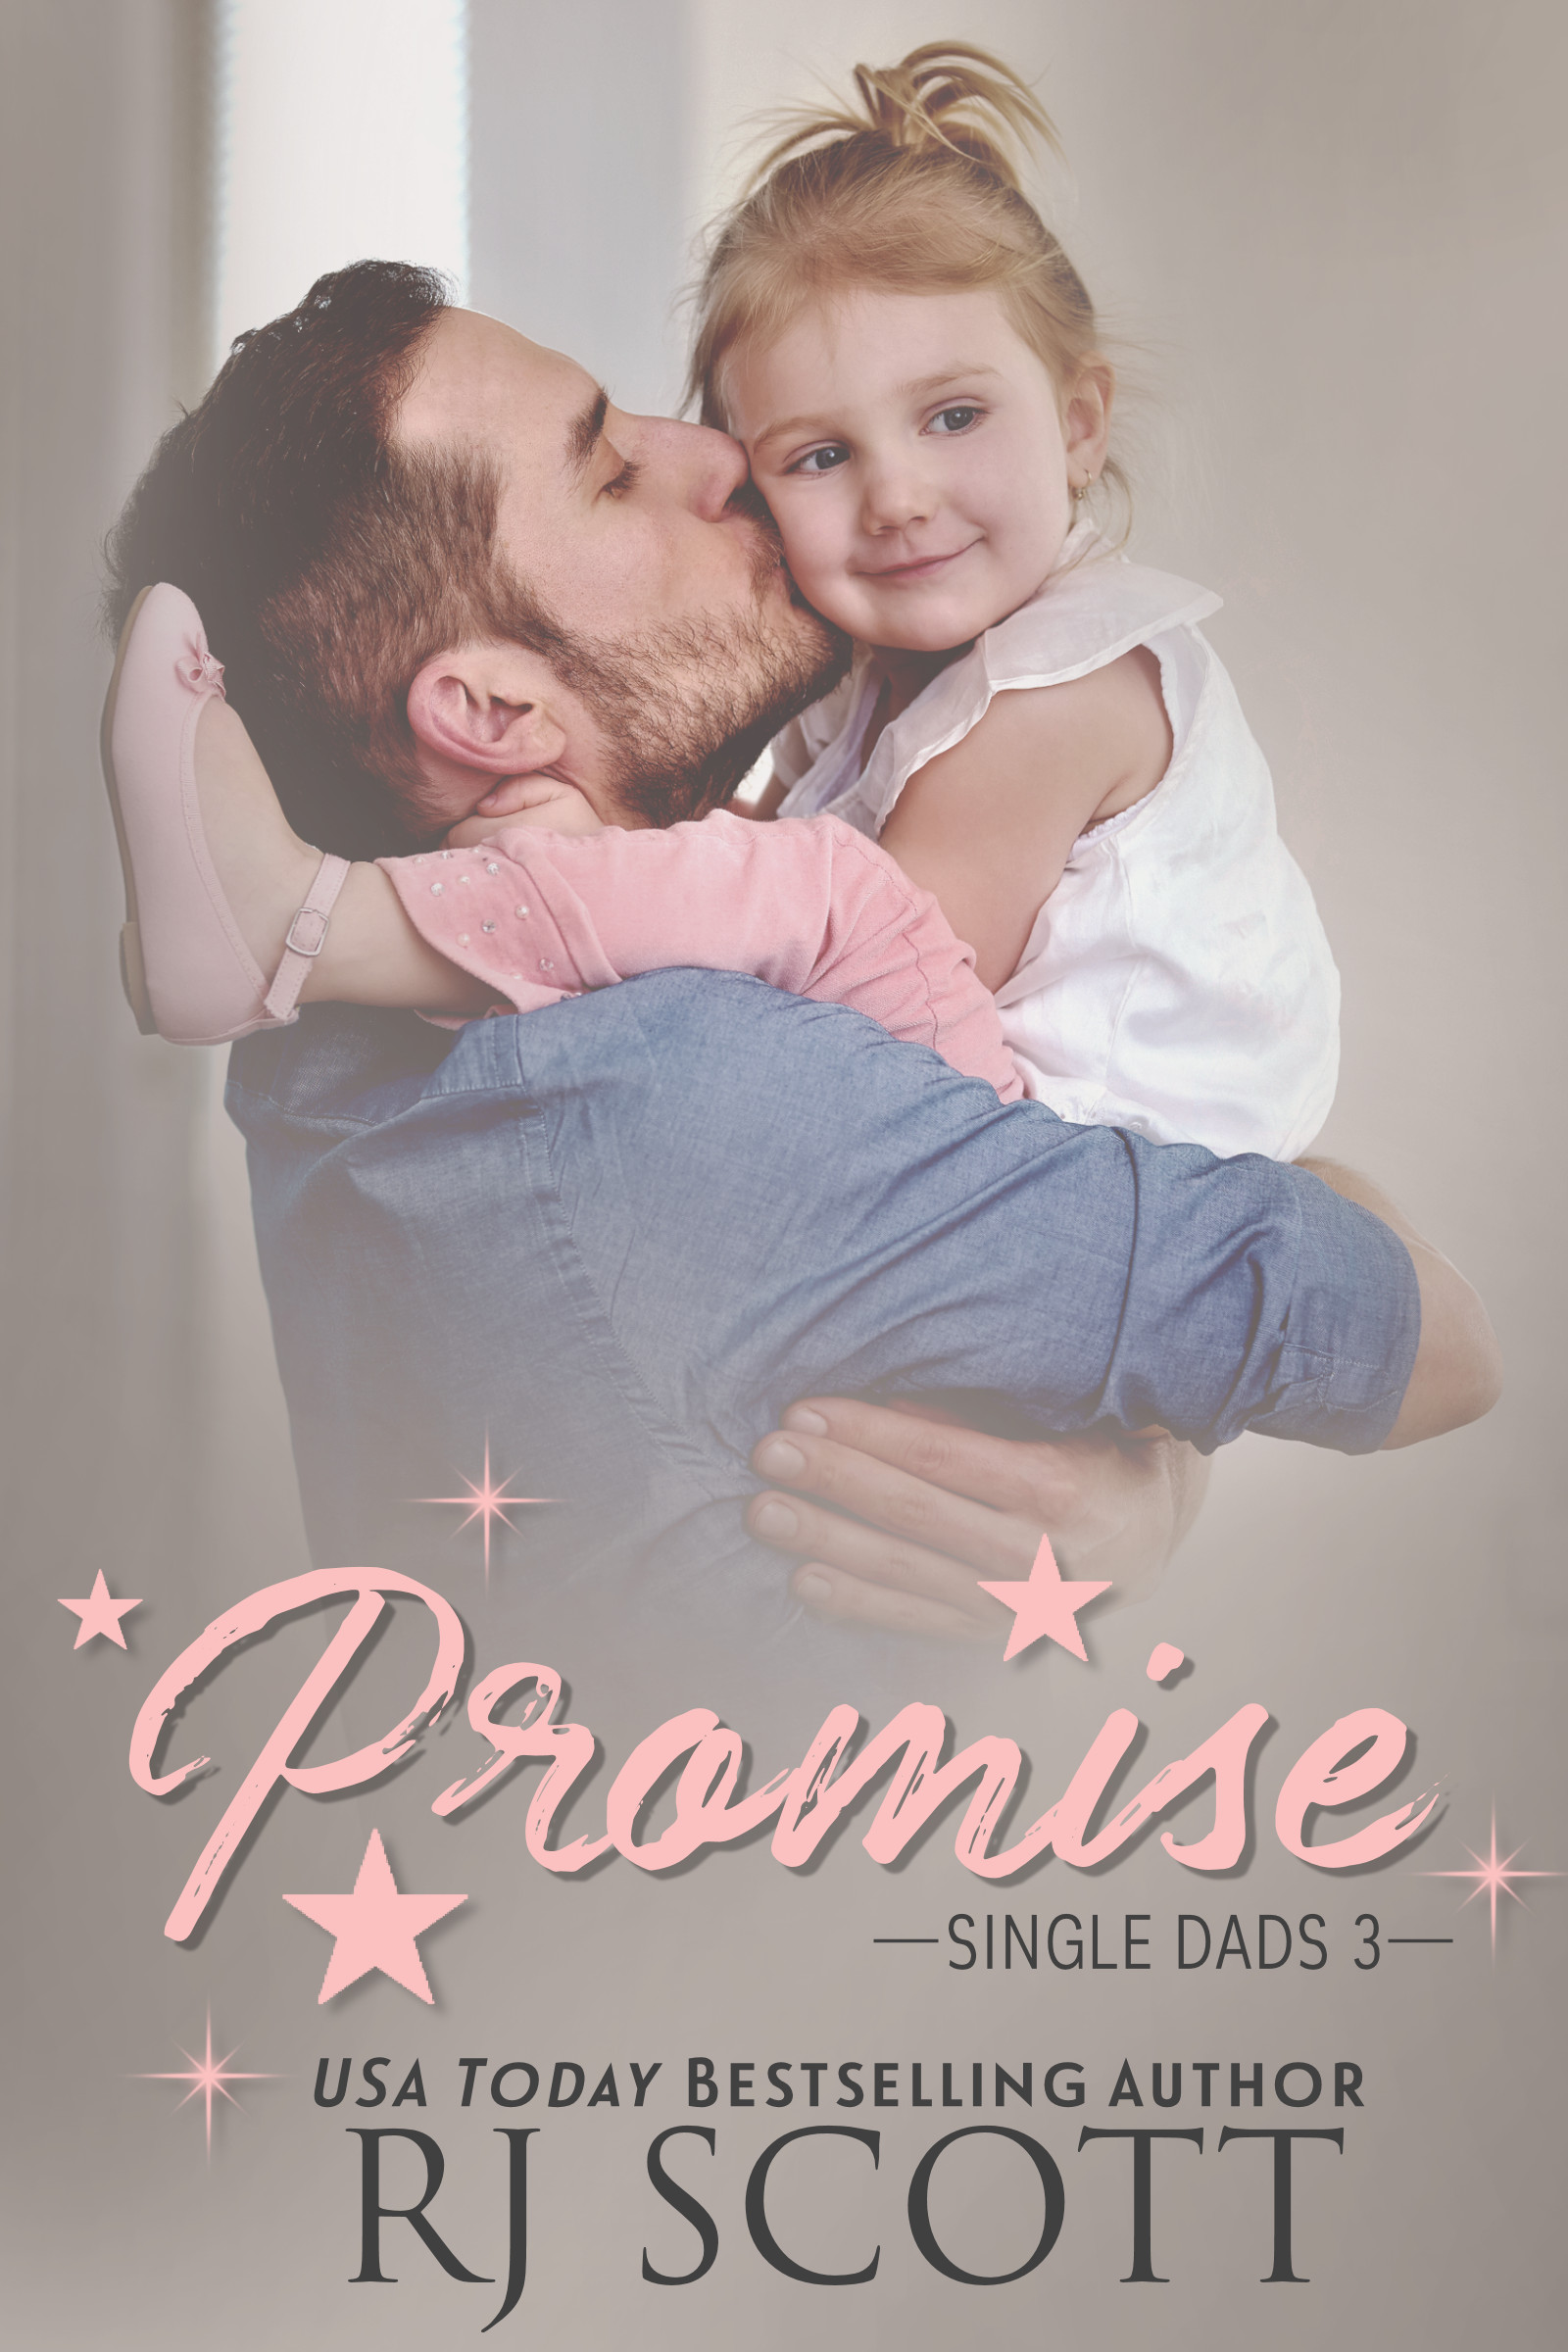 Promise, RJ Scott, MM Romance